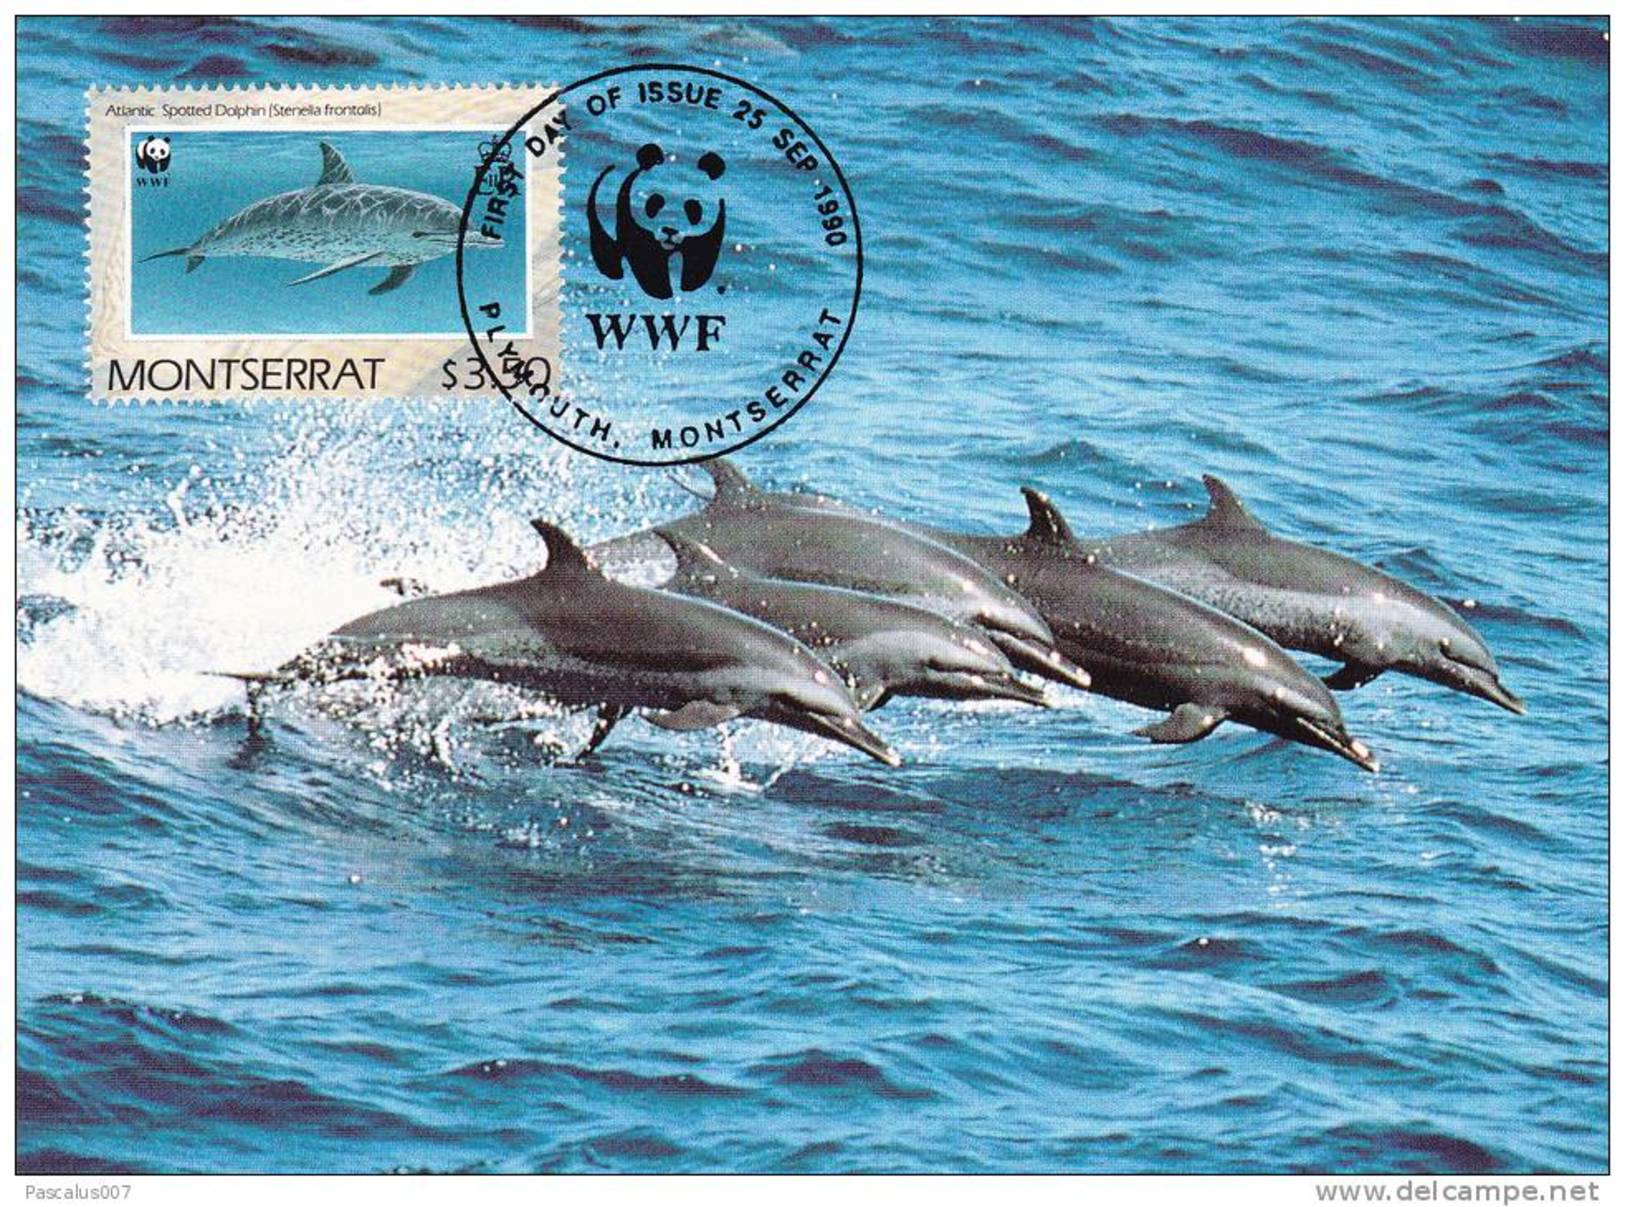 WWF - 103,34 - CM-MC - &euro; 1,19 - 25-9-1990 - $3,50 - Dolphins - Montserrat 1094212 - Montserrat